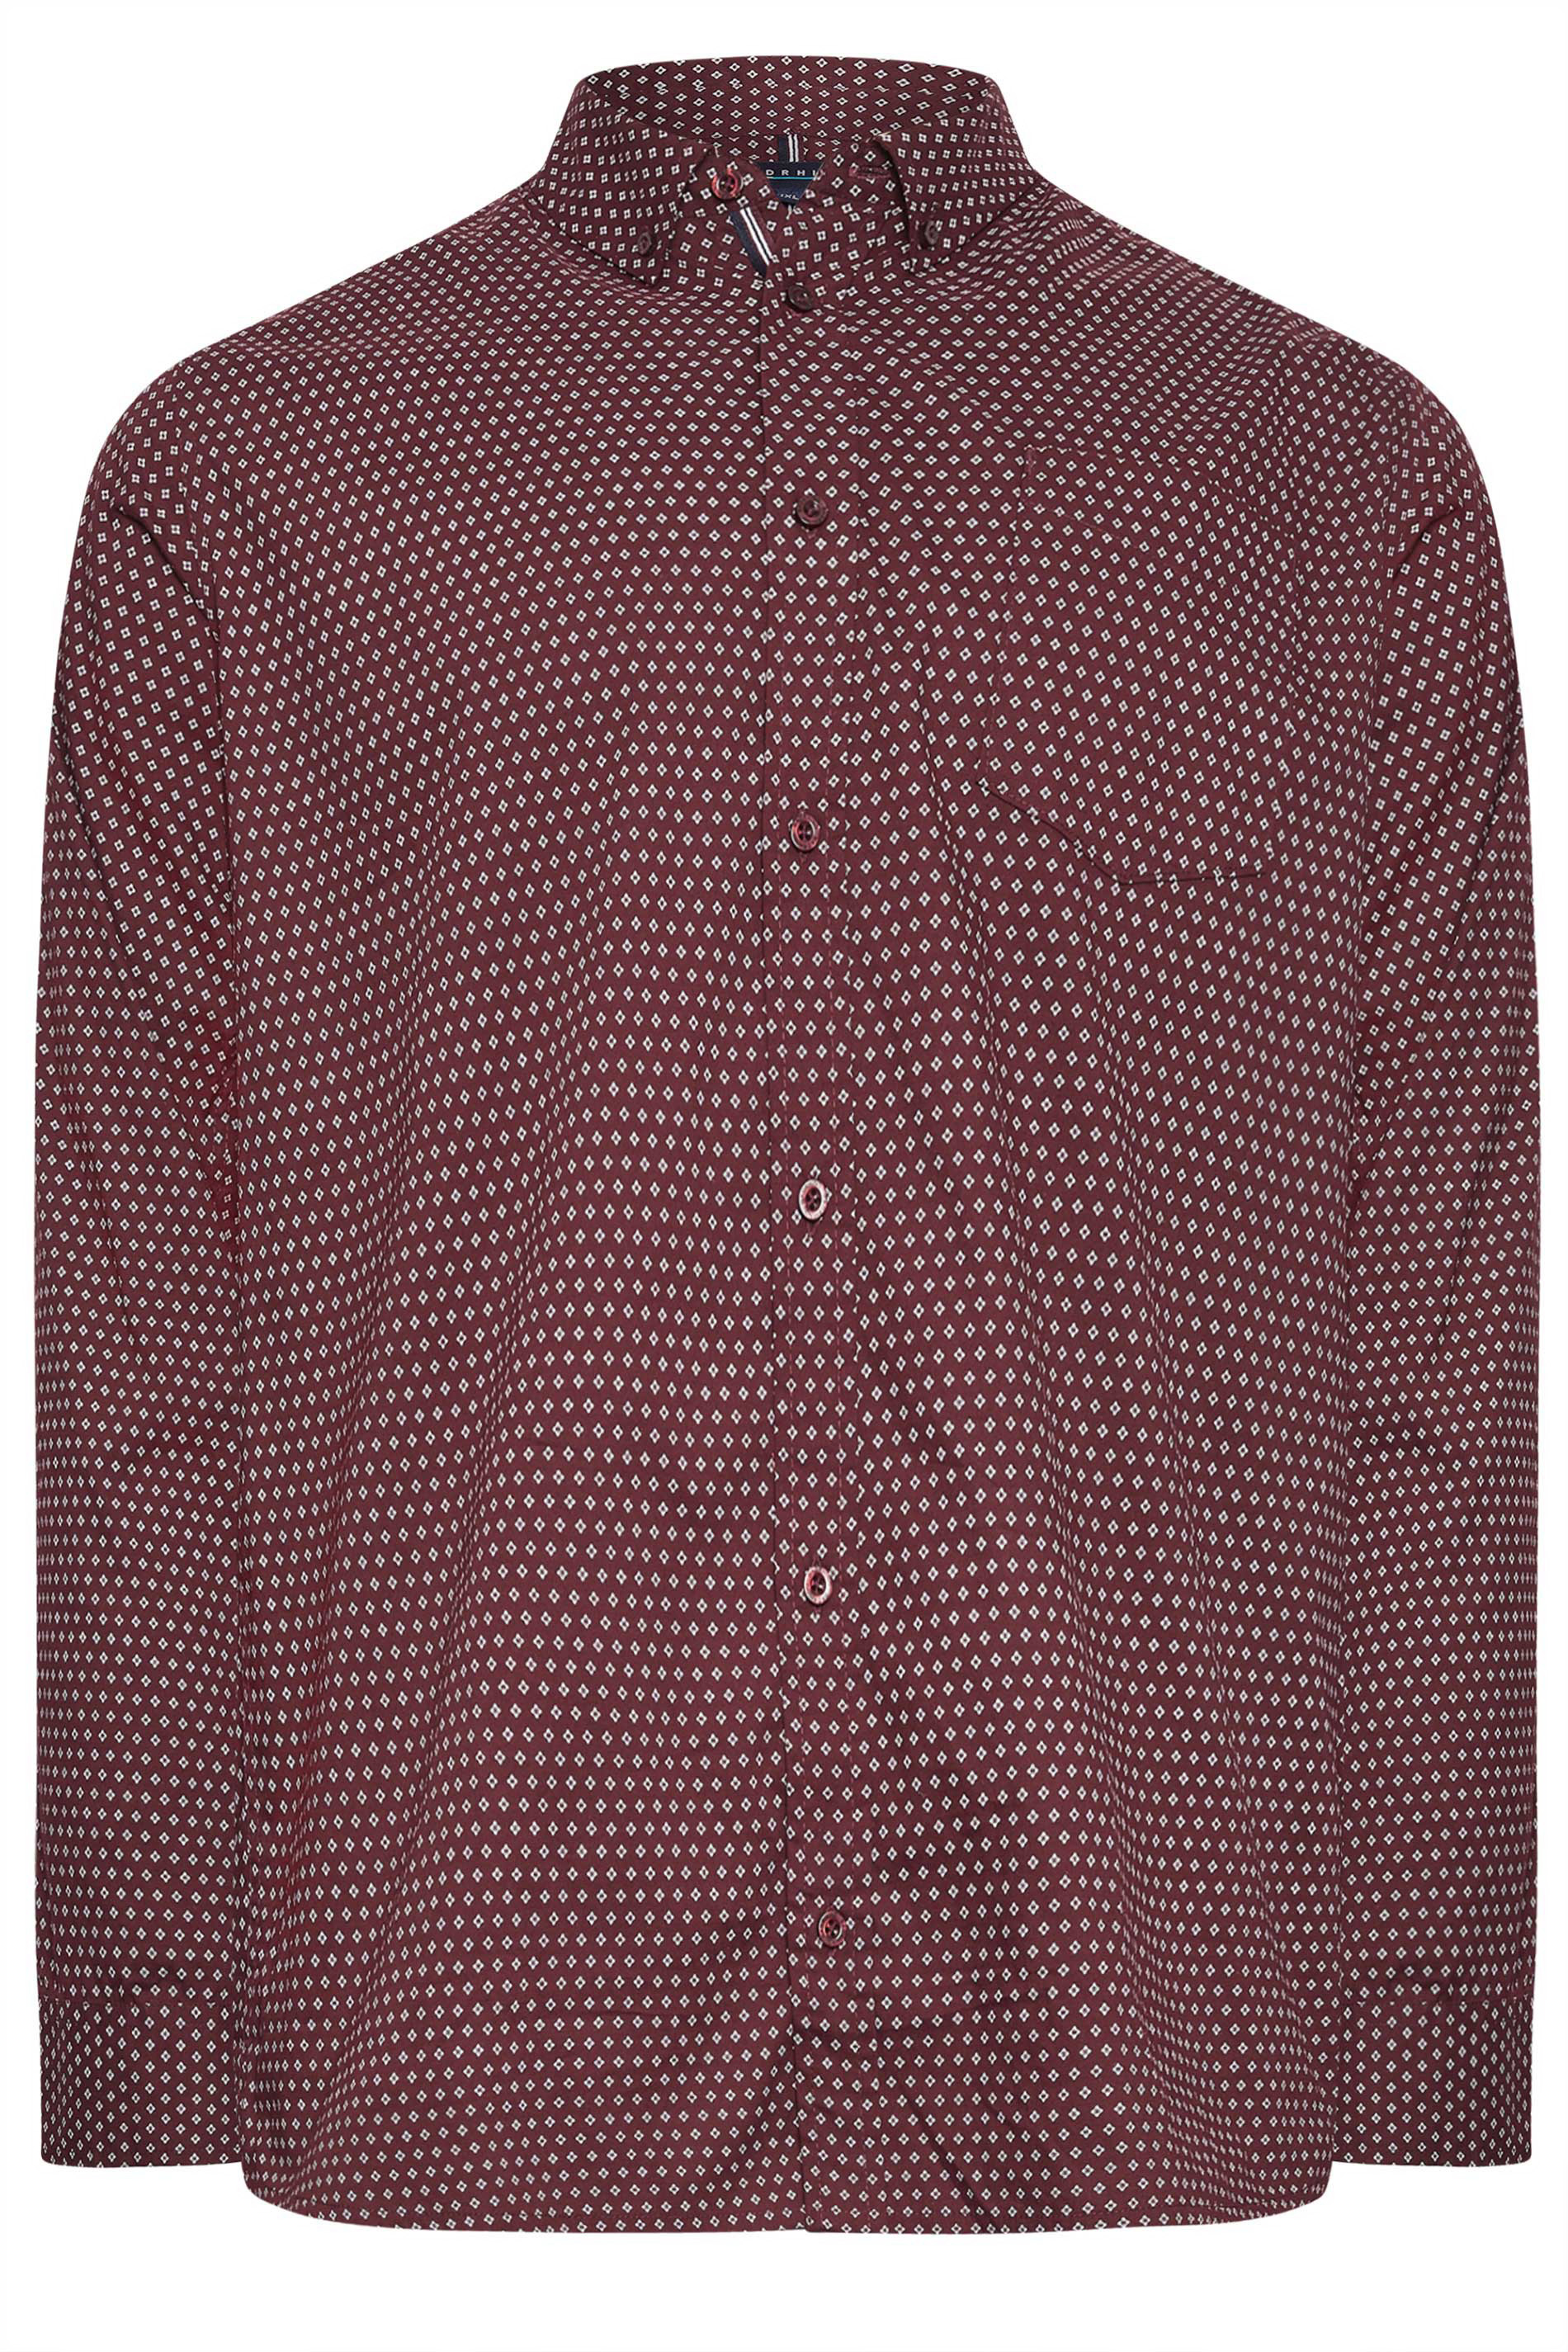 BadRhino Big & Tall Burgundy Red Dobby Poplin Long Sleeve Shirt | BadRhino 2